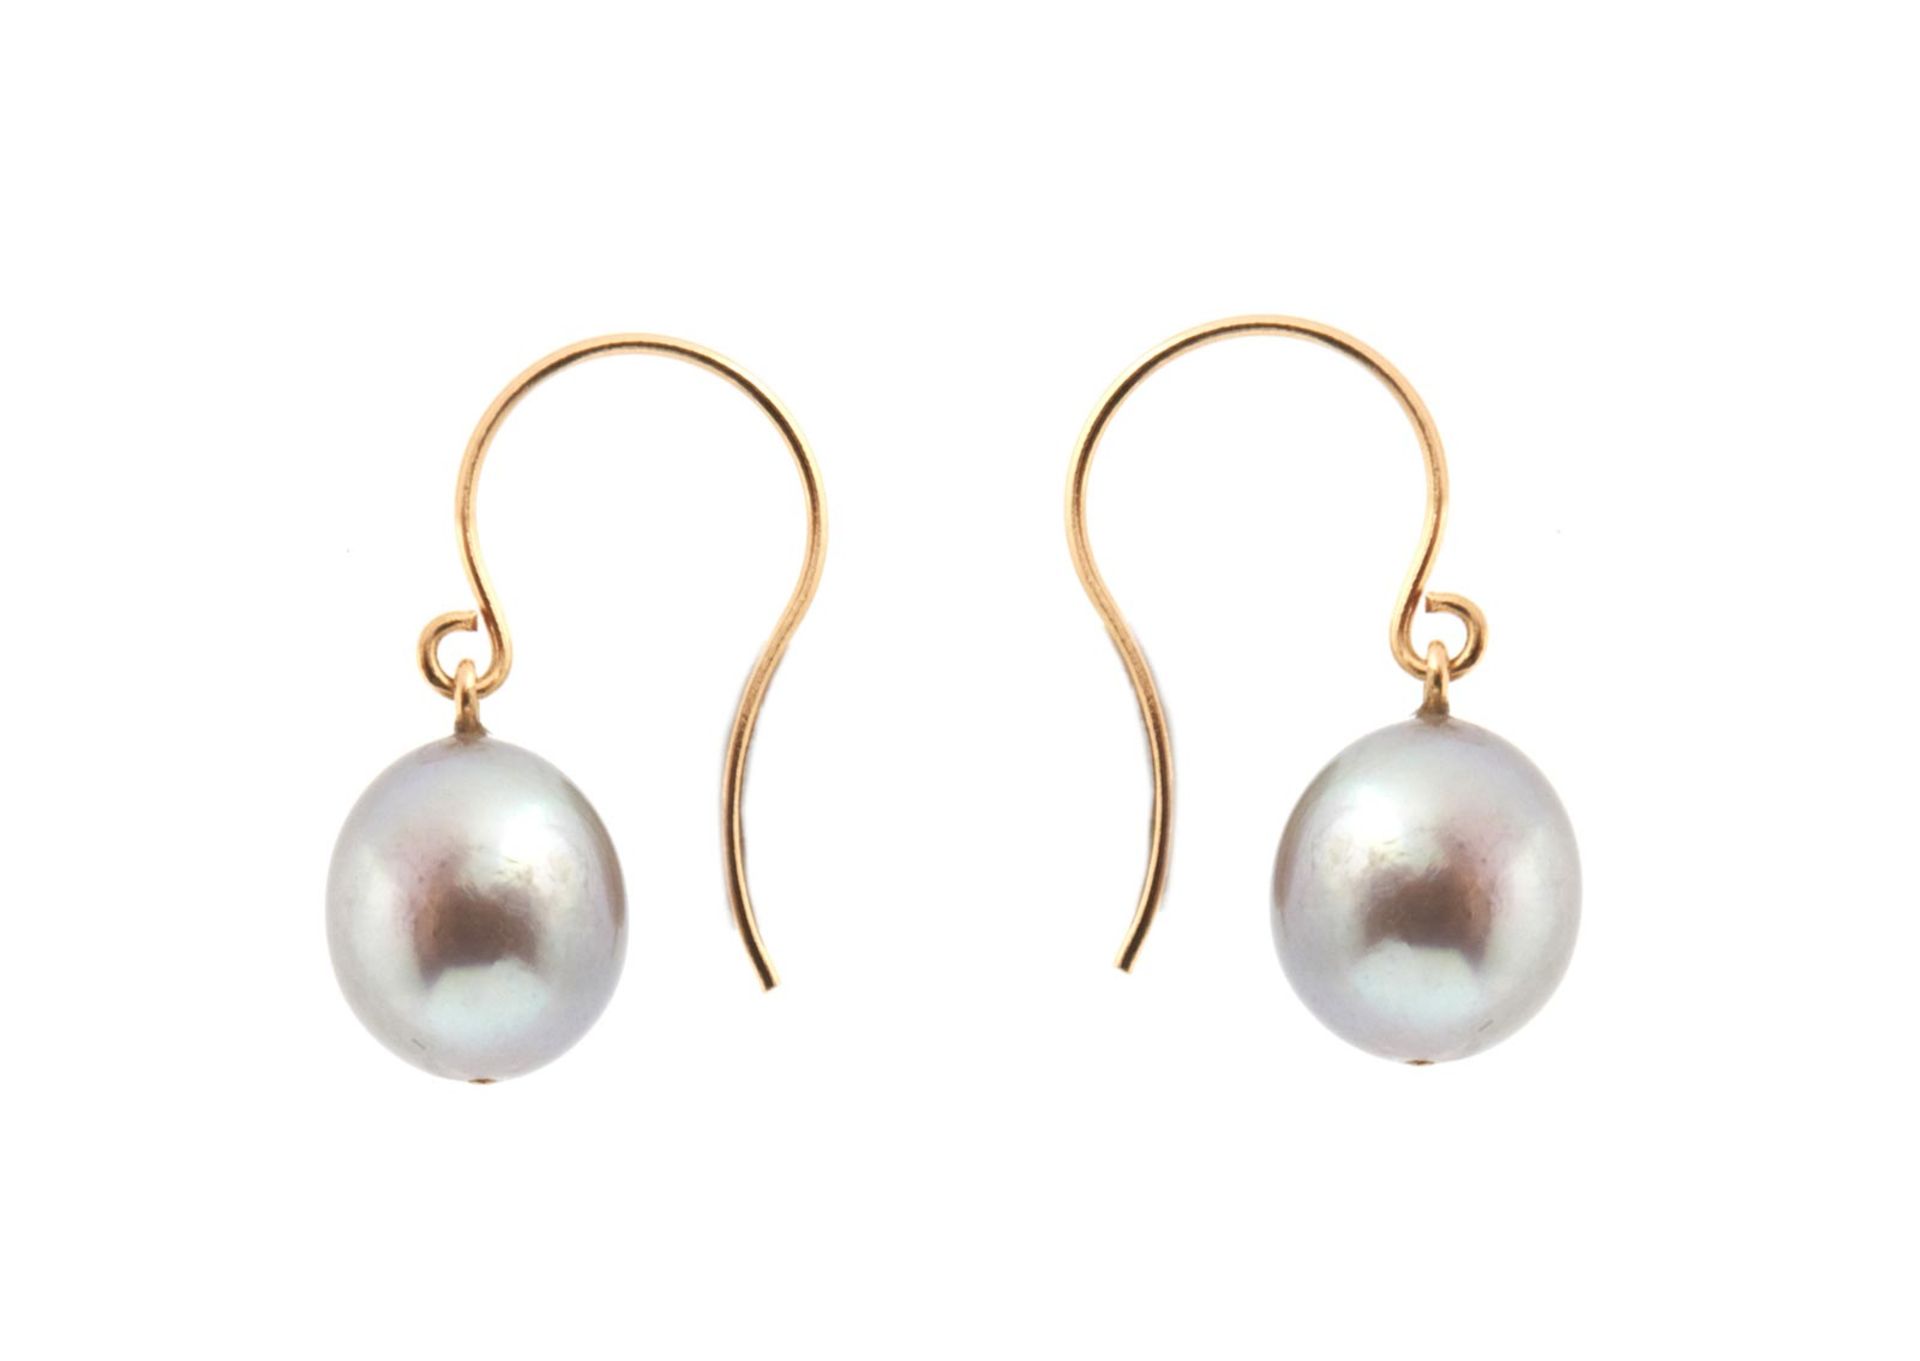 HOOK EARRINGS En oro de 18 kl. con perlas cultivadas de agua dulce en color gris de 10,5-11 mm. de d